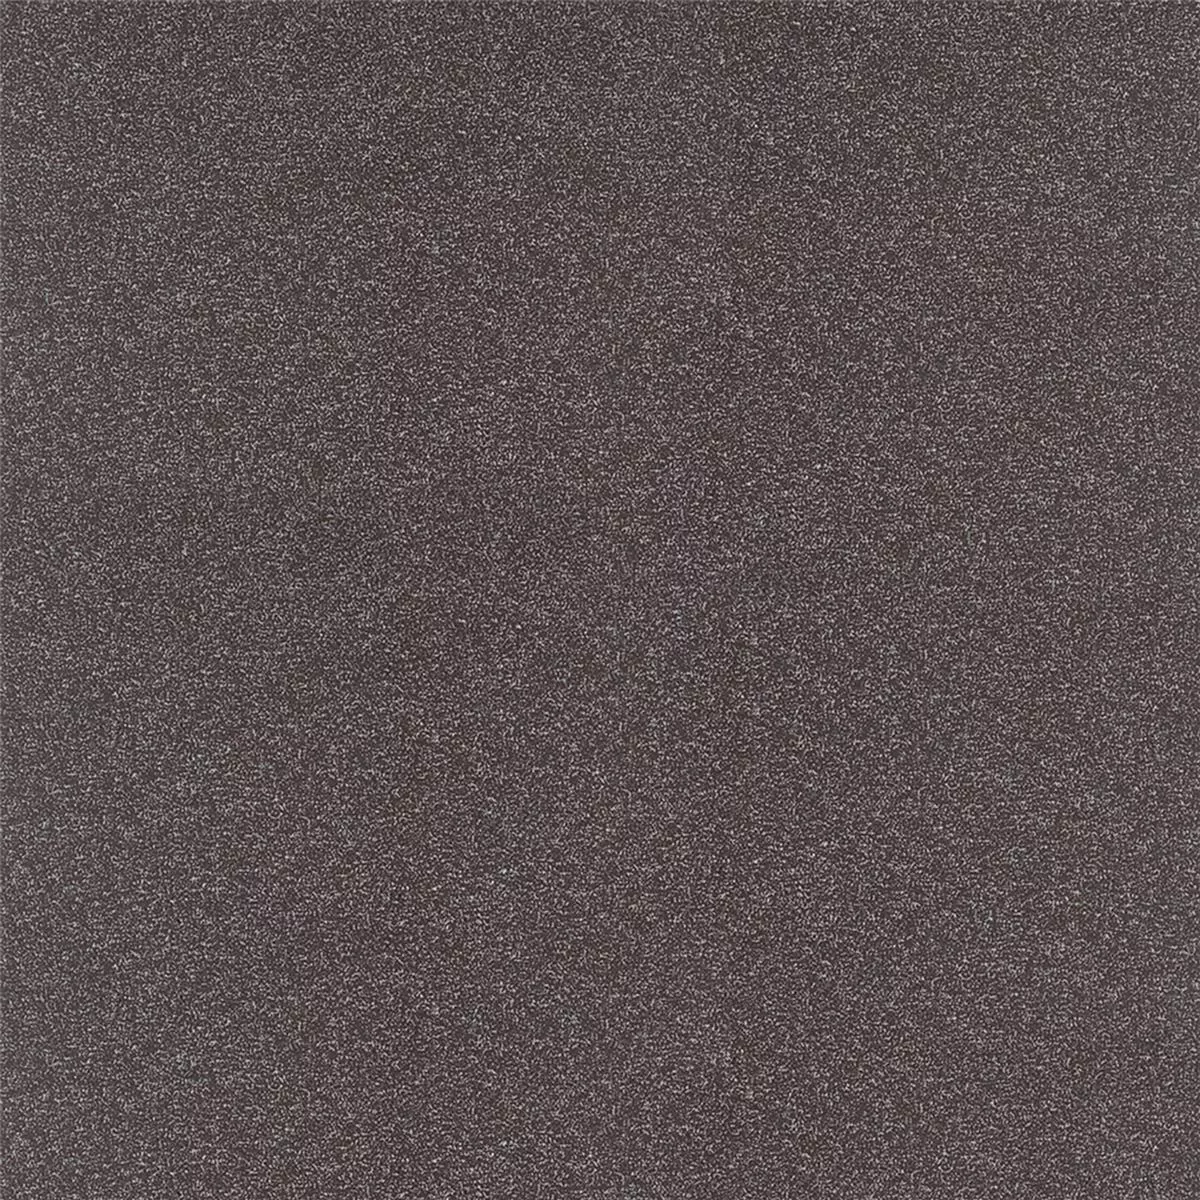 Sample Floor Tiles Courage Fine Grain R10/A Anthracite 30x30cm